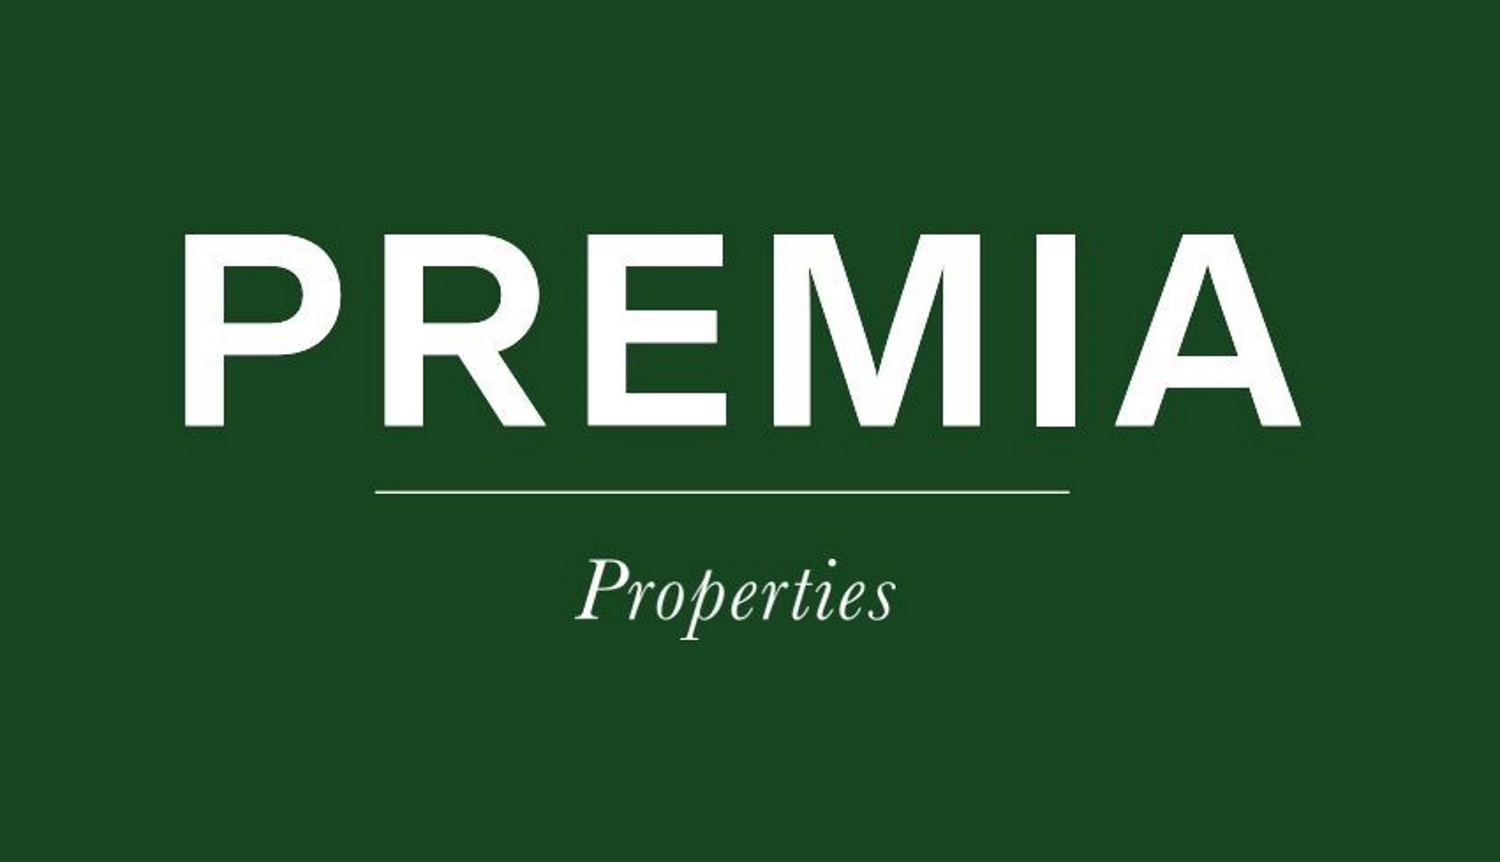 Premia Properties: Σημαντικές επενδύσεις σε φοιτητική εστία, Μπουτάρη, Ιόλη, Athens Heart και διπλασιασμός λειτουργικής κερδοφορίας